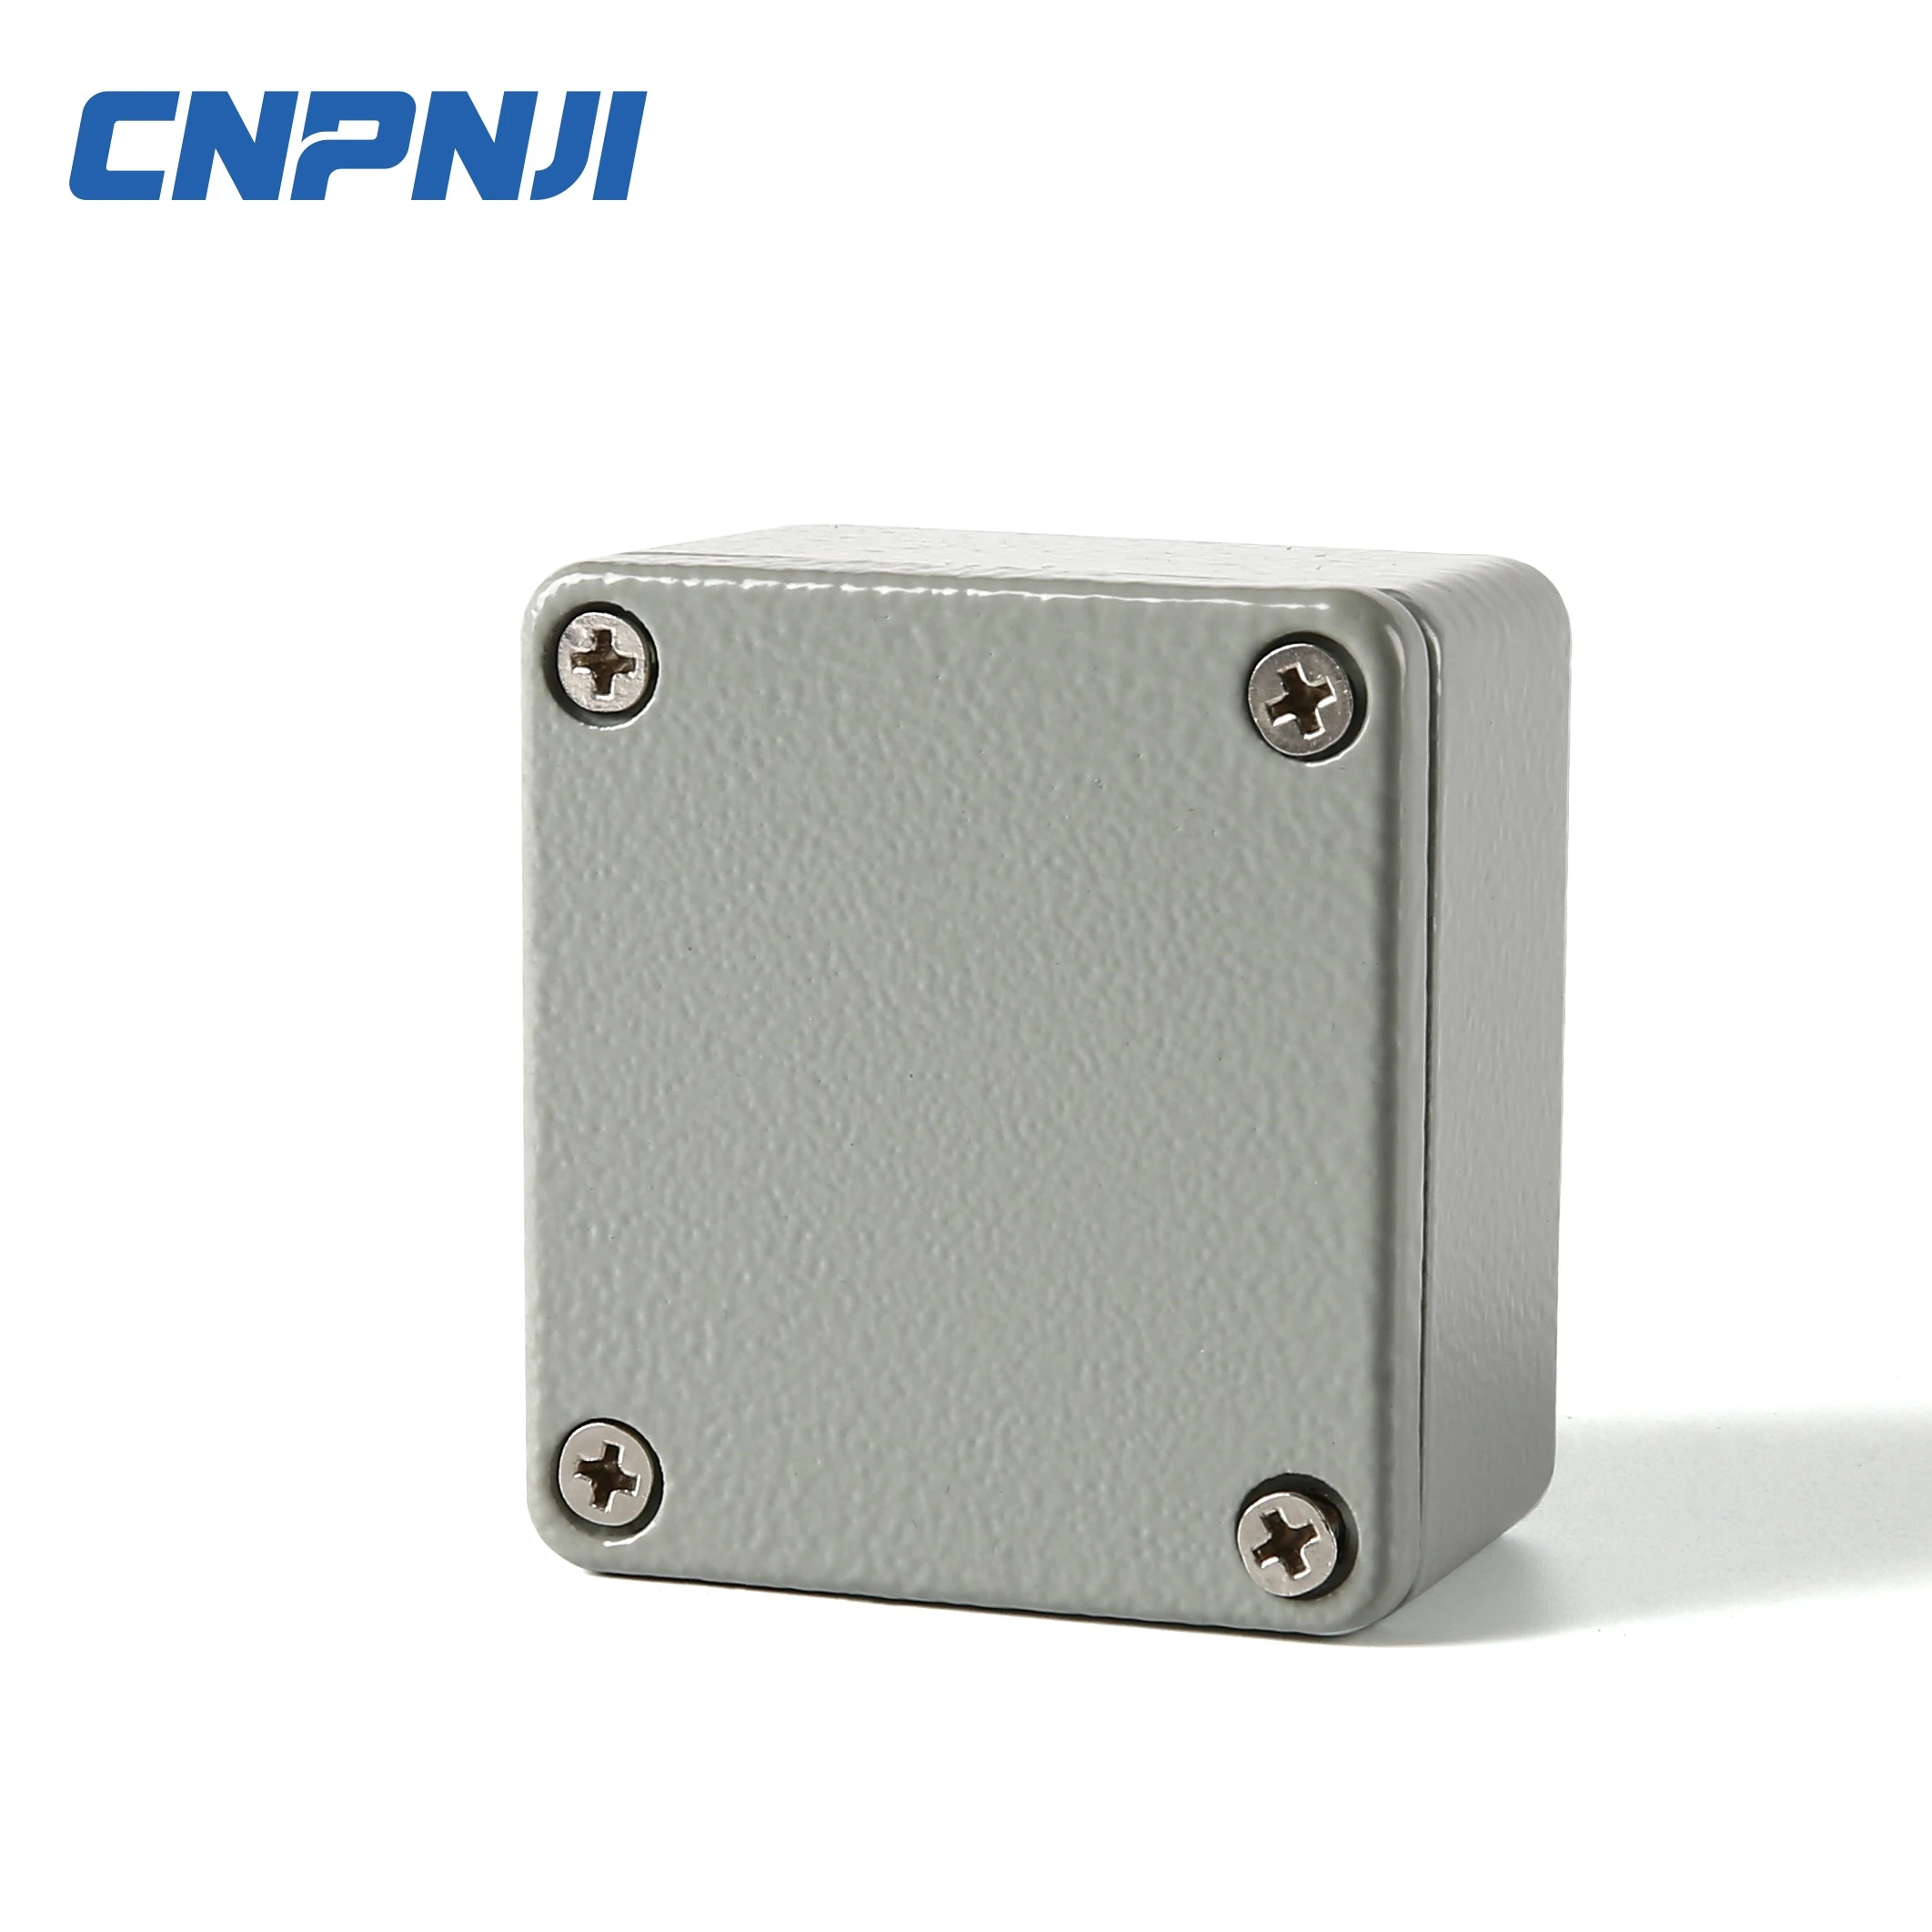 CNPNJI IP67 aluminum die cast enclosure/metal junction box